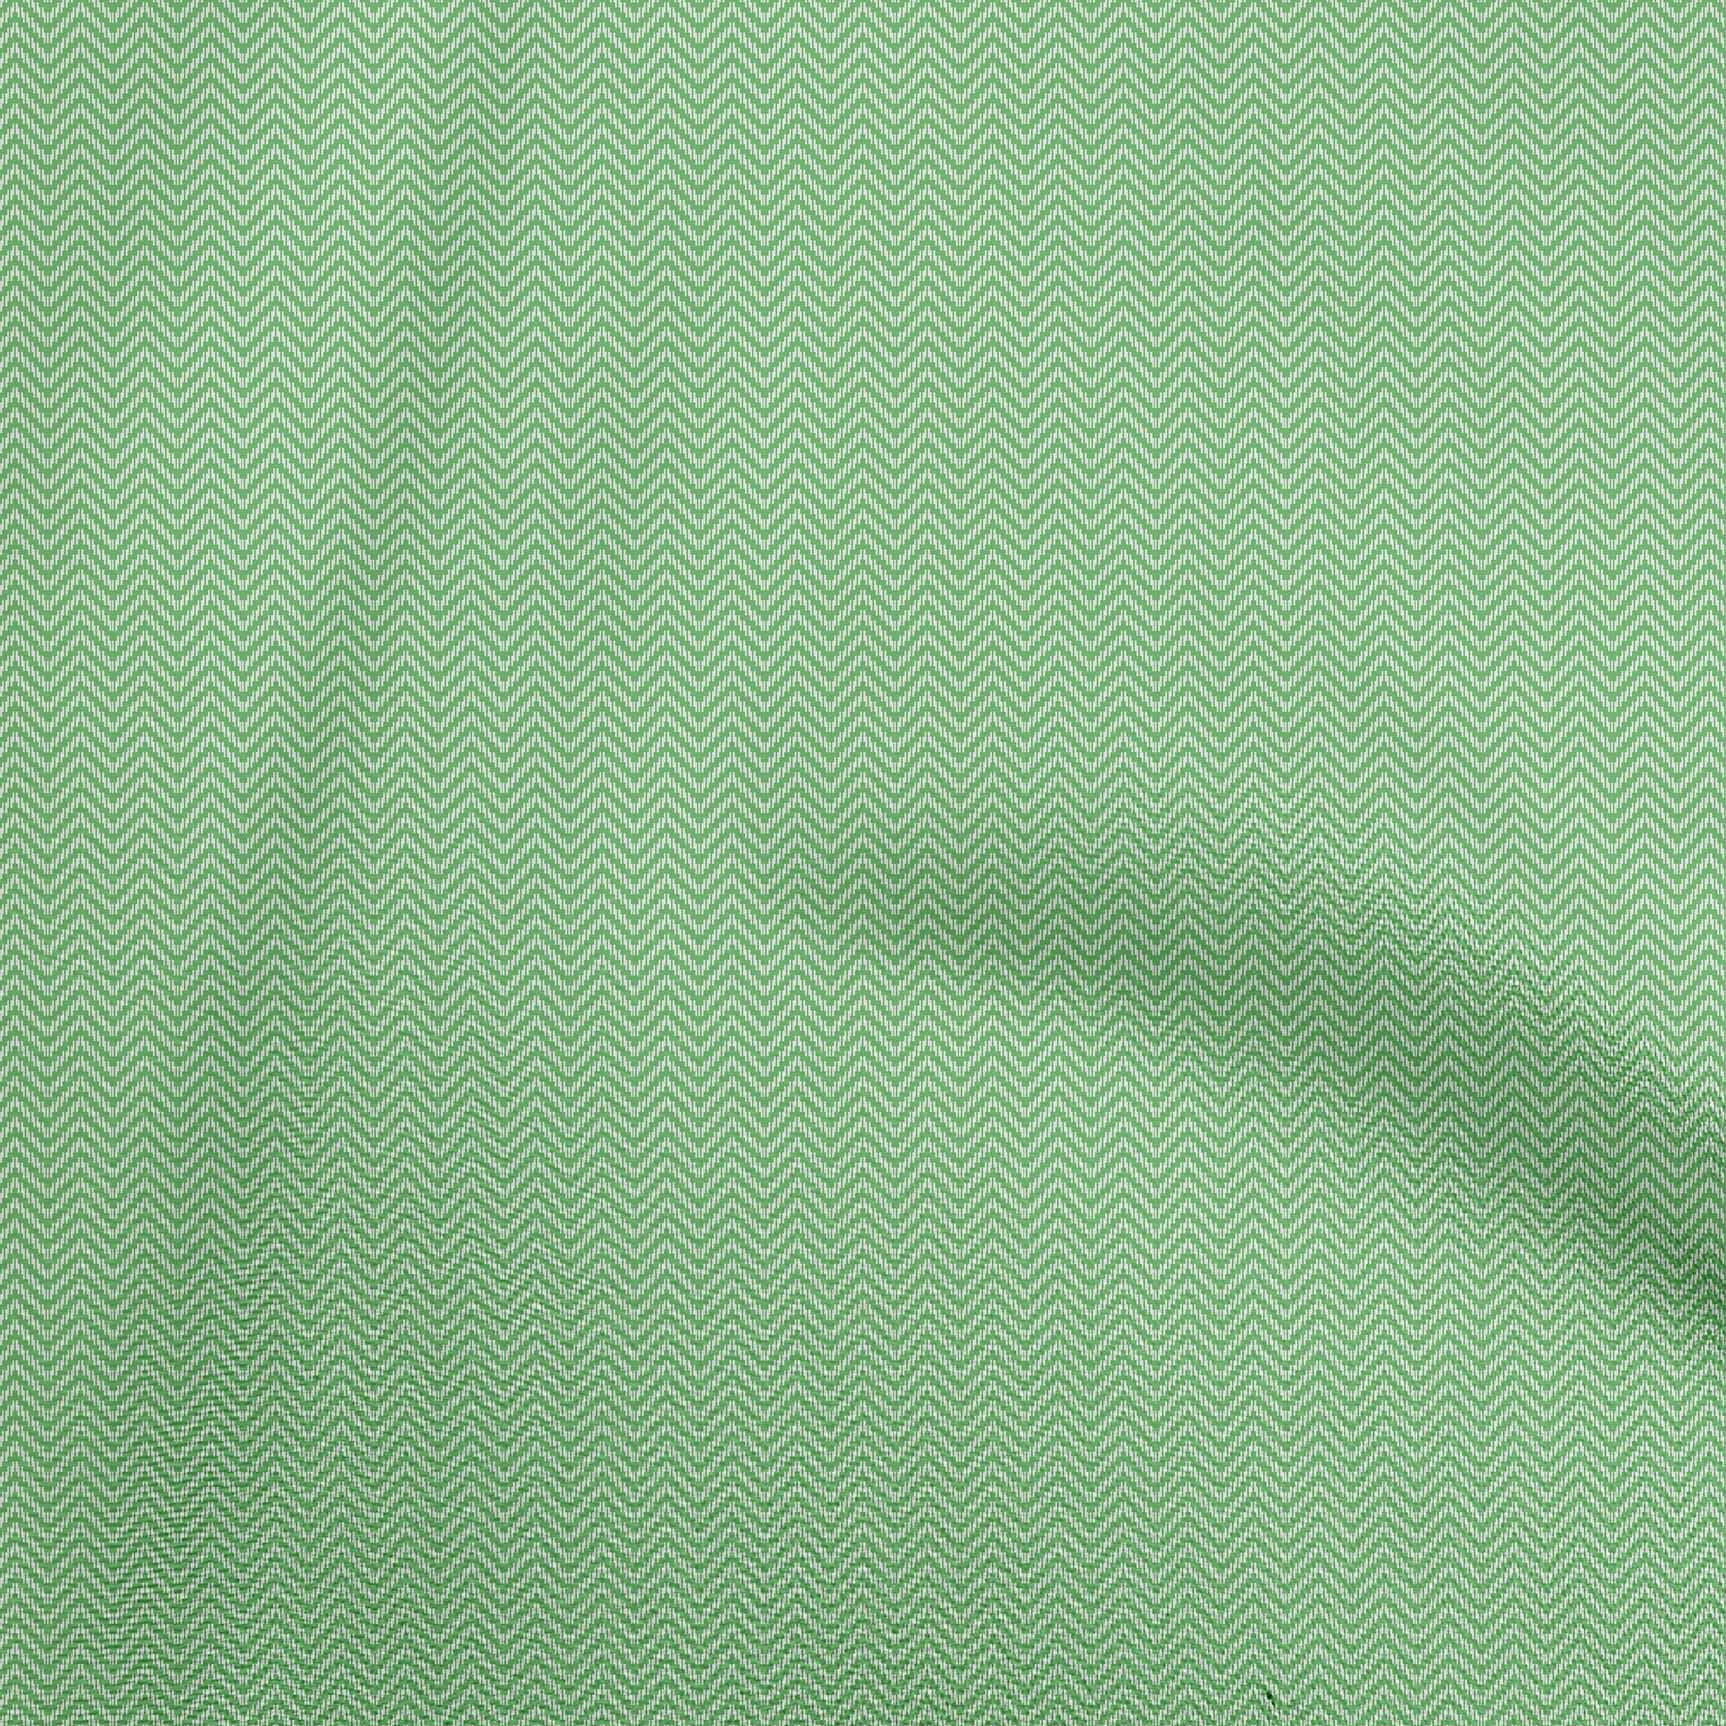 Green silk cotton fabric fabric by the yard